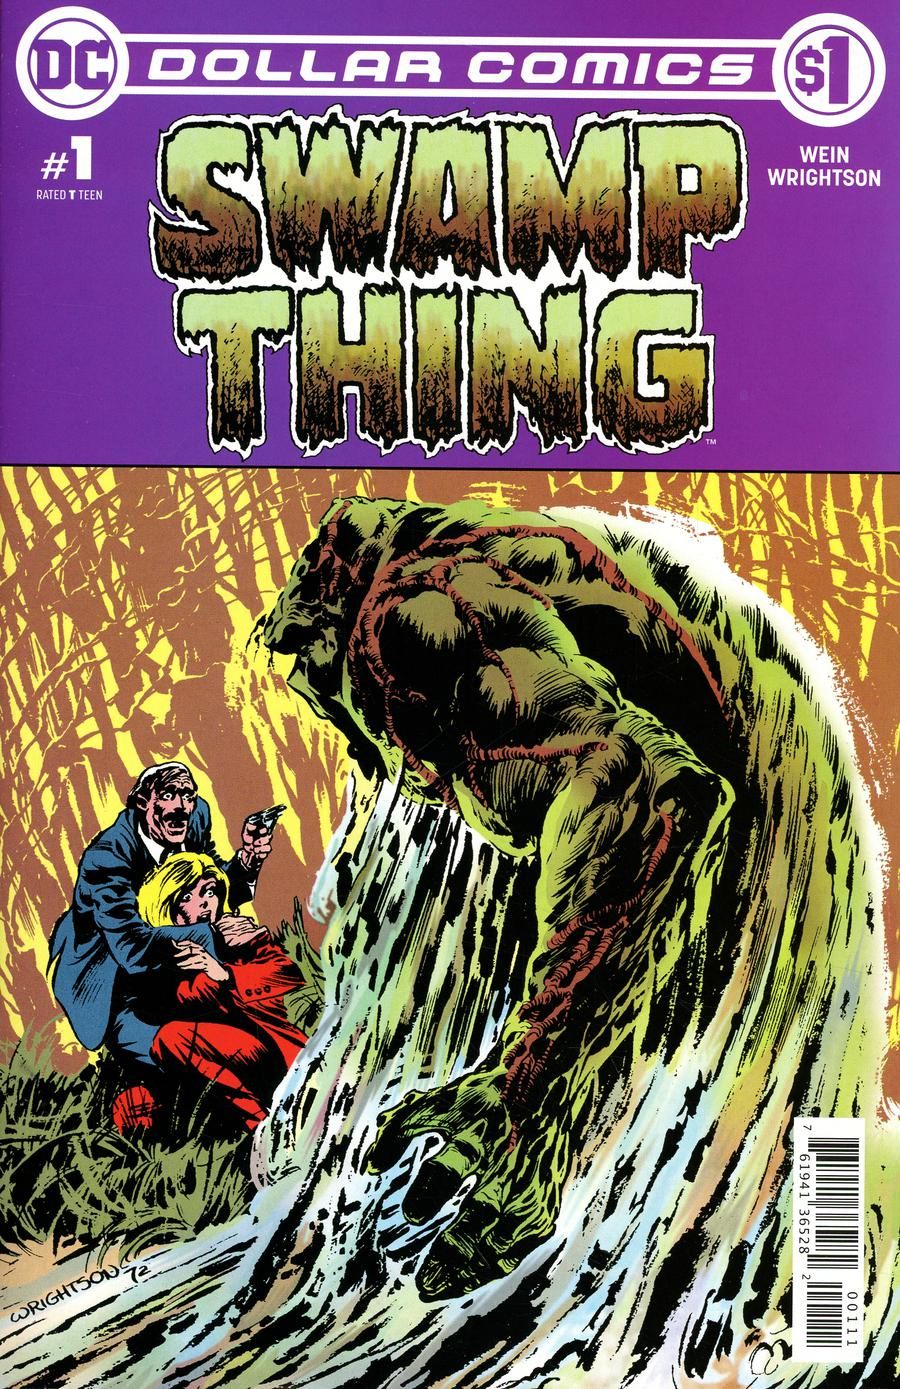 Dollar Comics: Swamp Thing #1 Comic